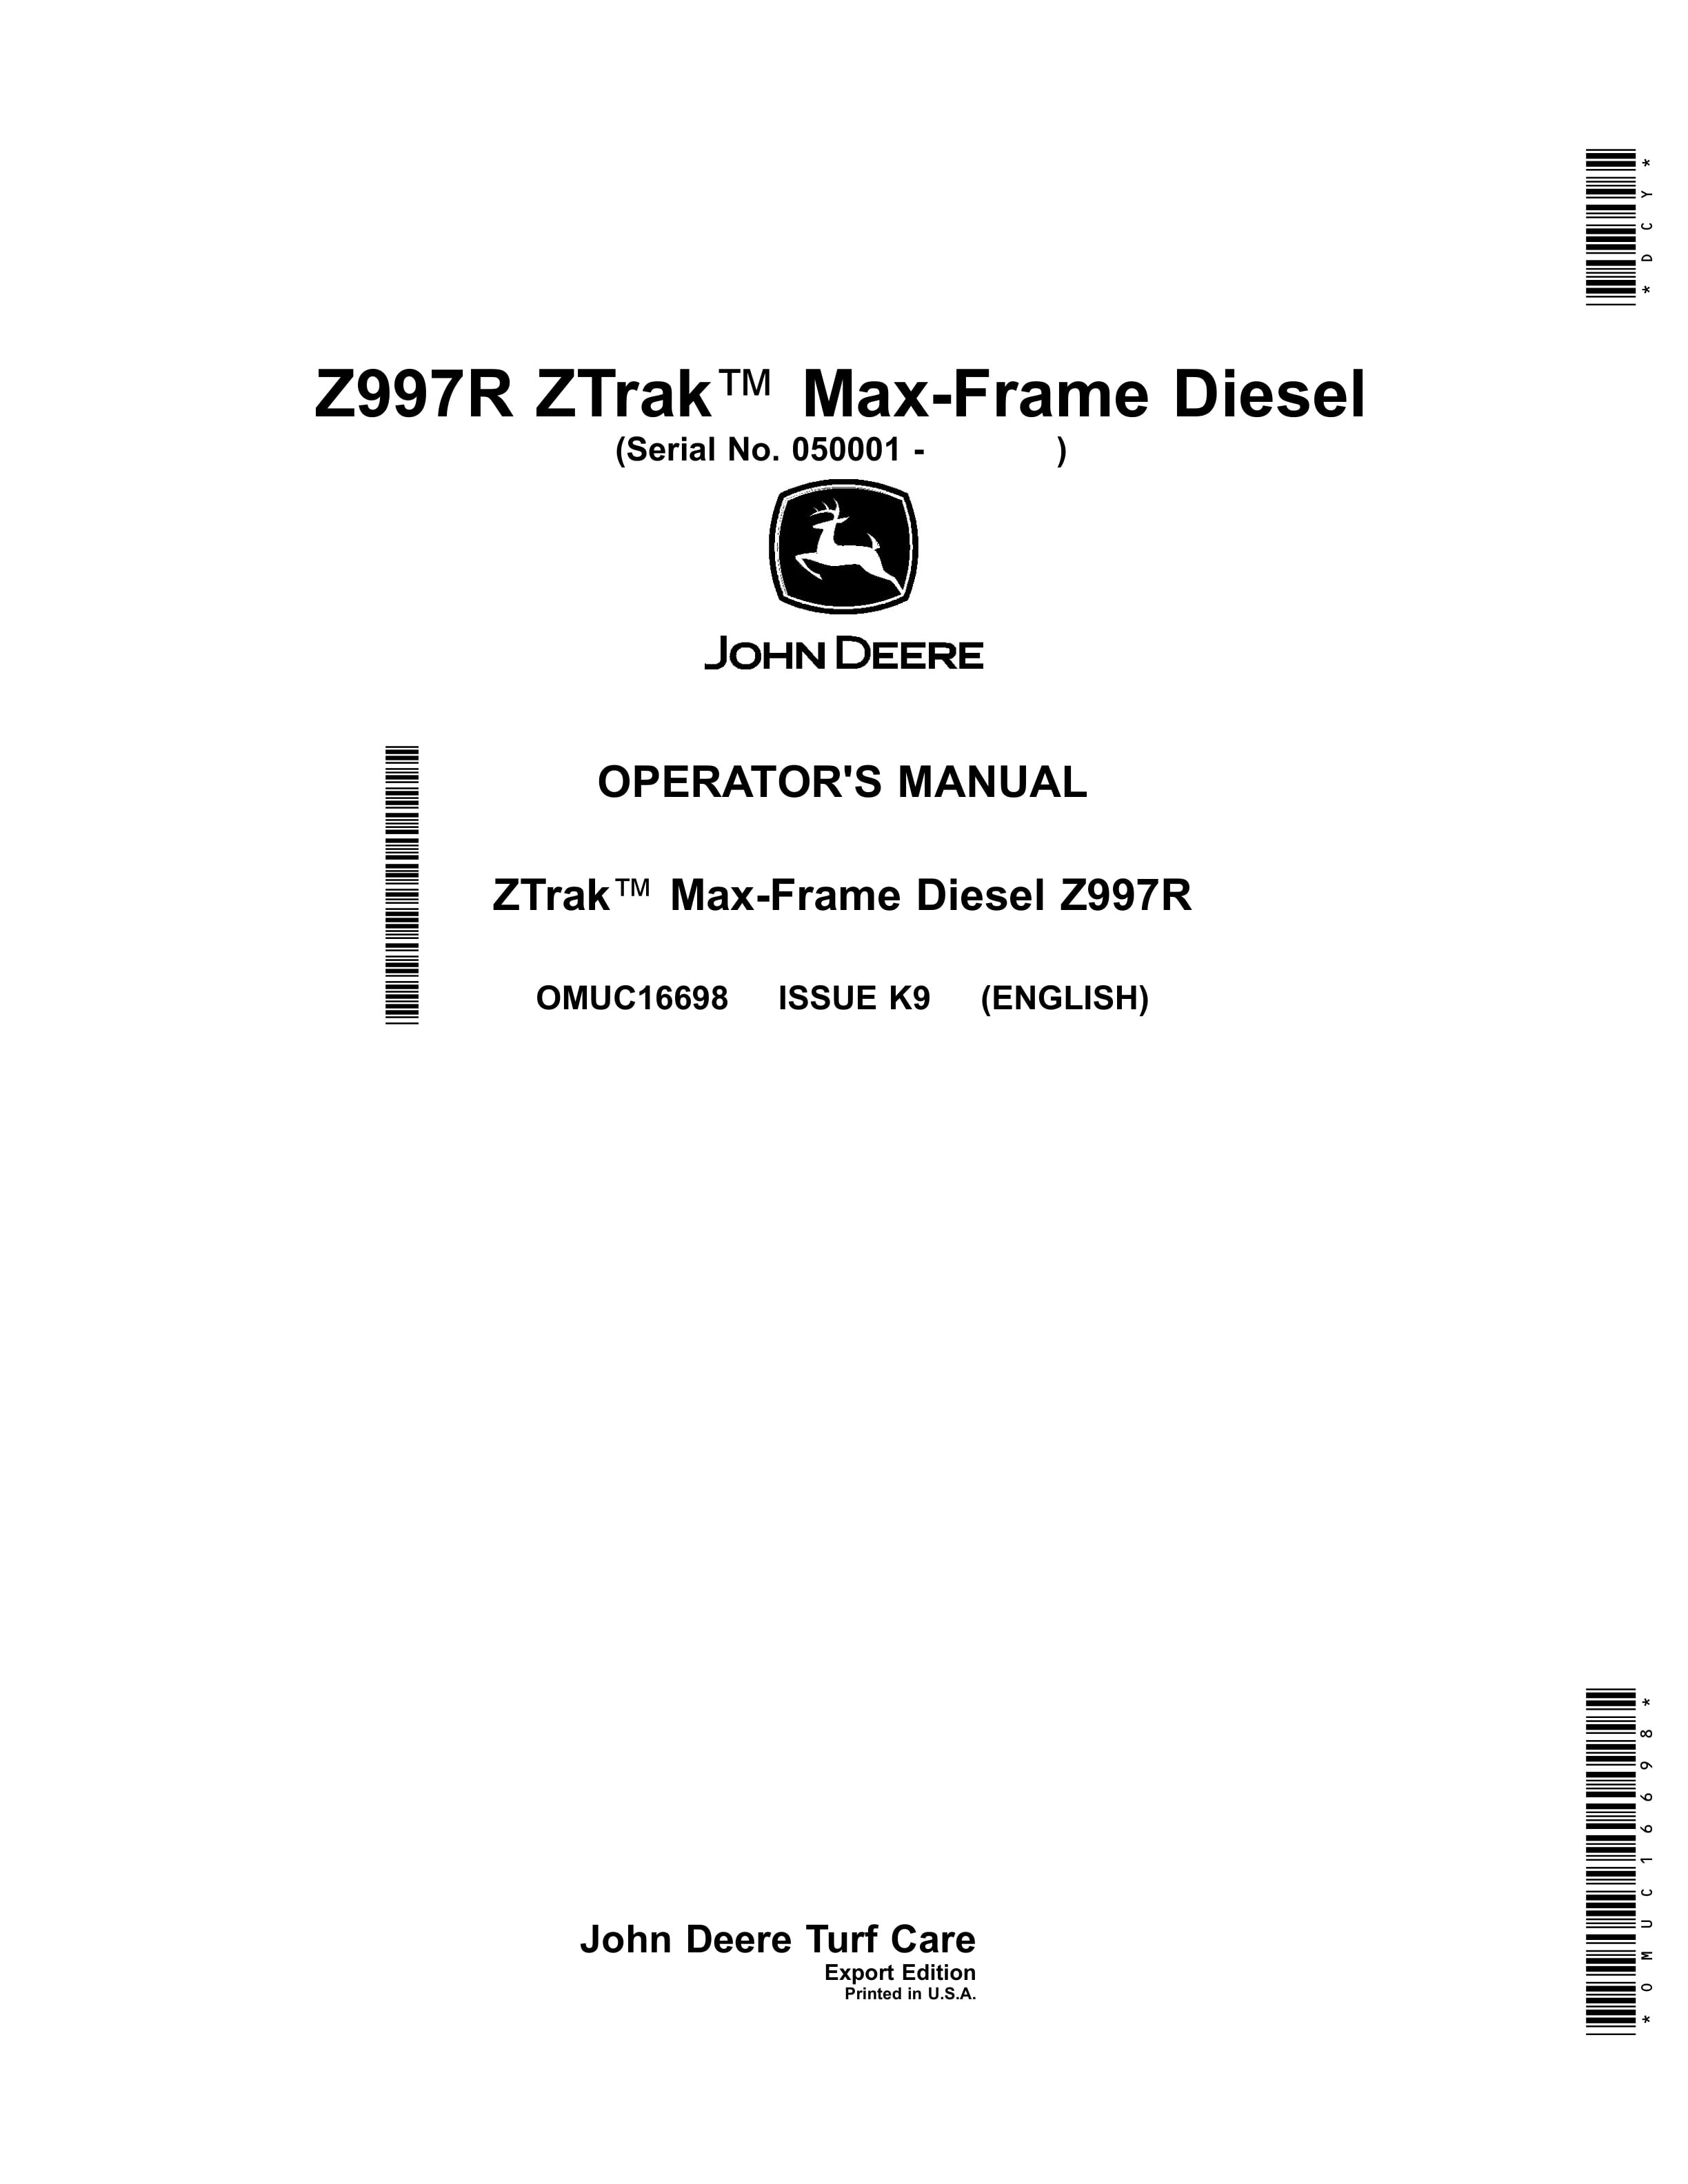 John Deere Z997R ZTrak Max Frame Diesel Operator Manual OMUC16698 1